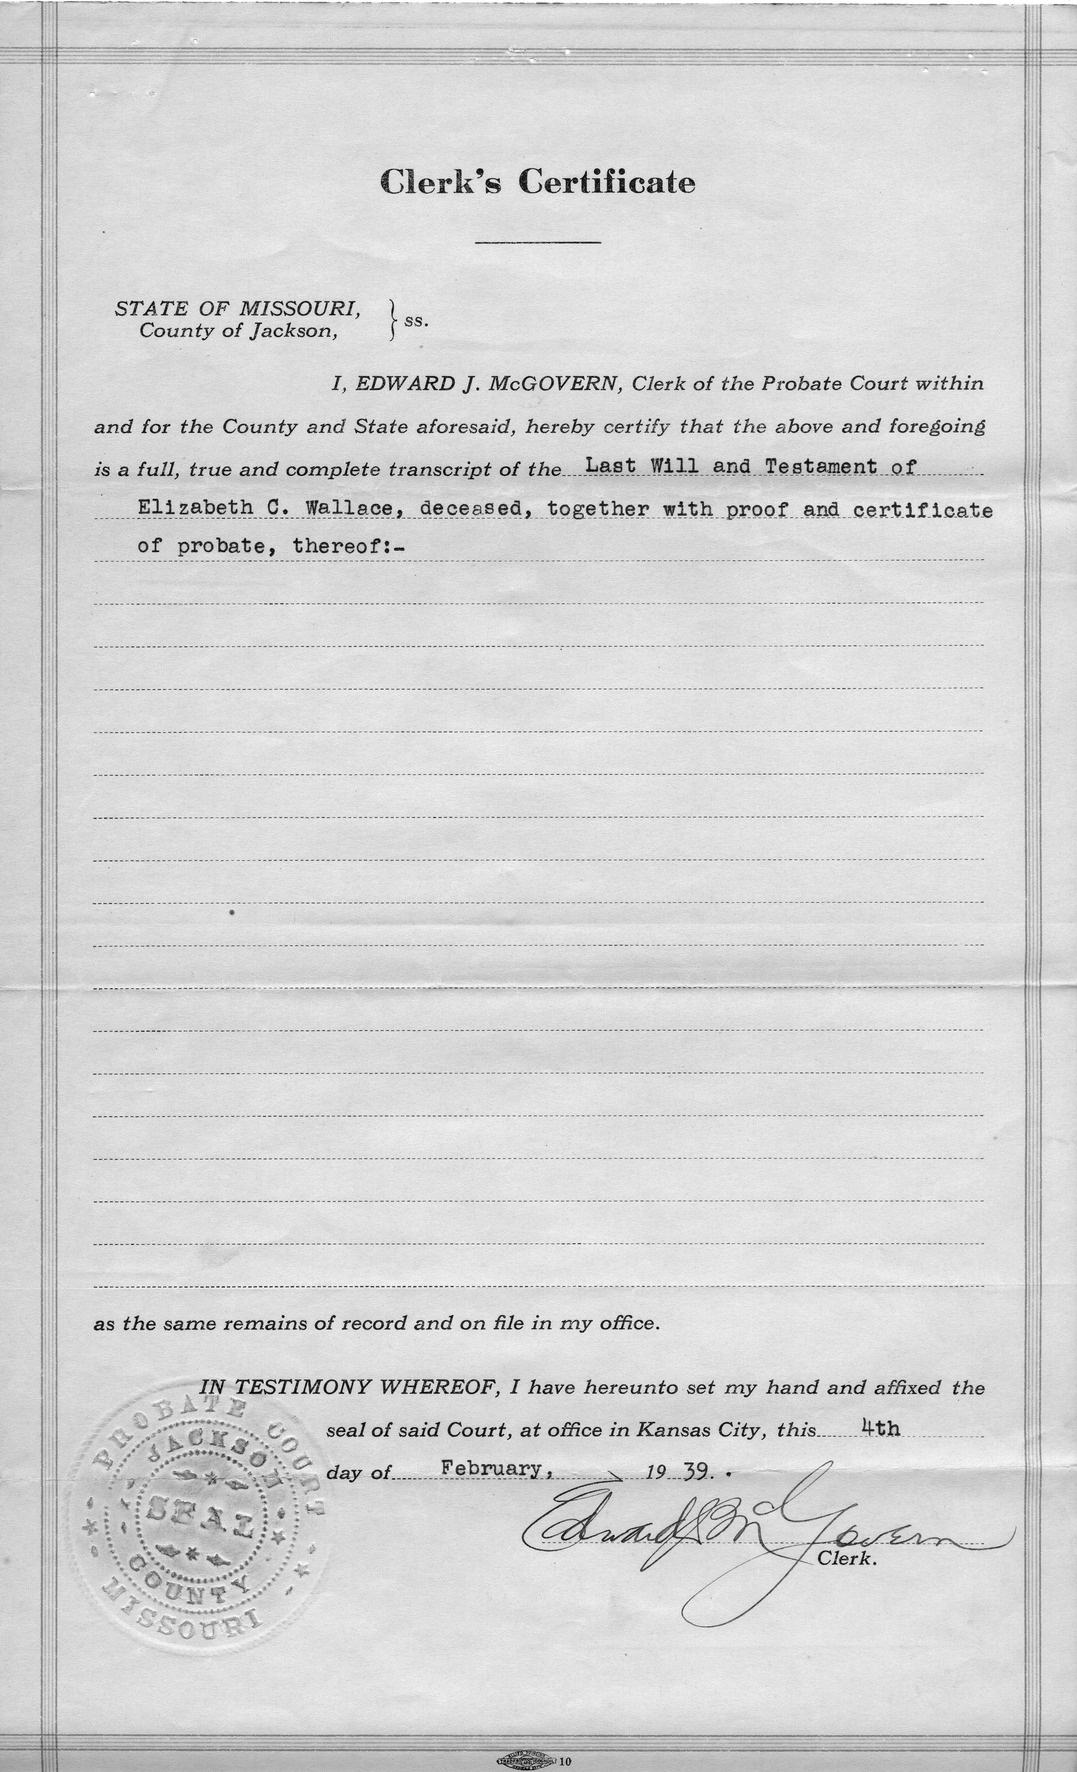 Clerk's Certificate of Edward J. McGovern